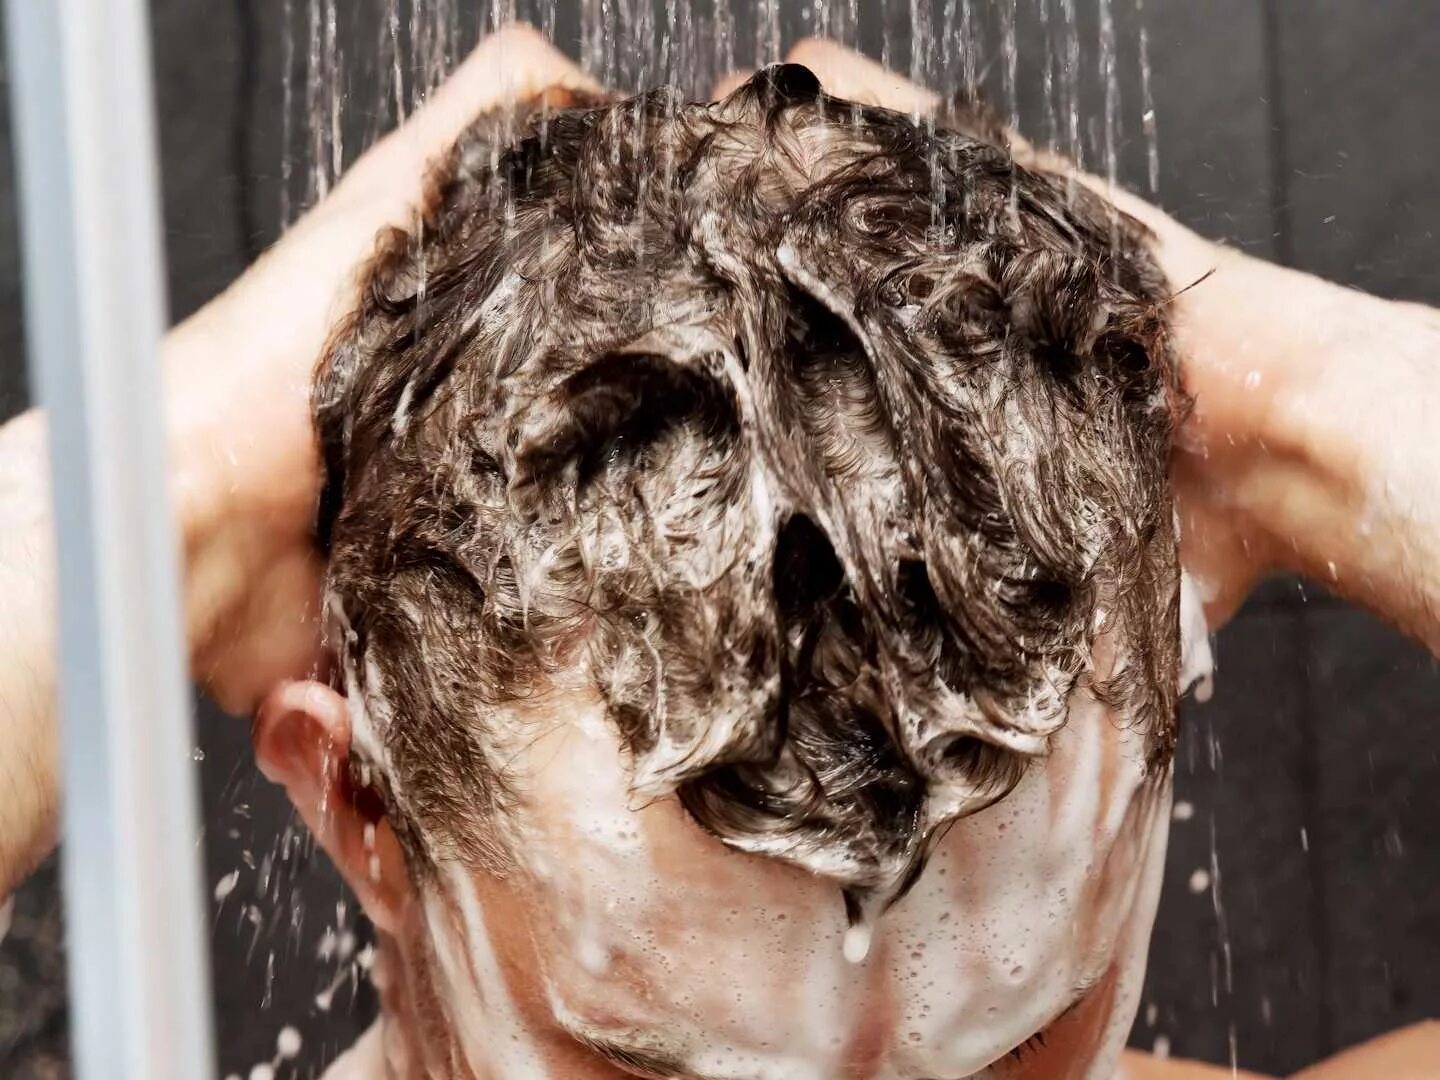 Мытье головы. Мытье головы мужчине. Мытье волос мужчина. Мужчина моет голову.